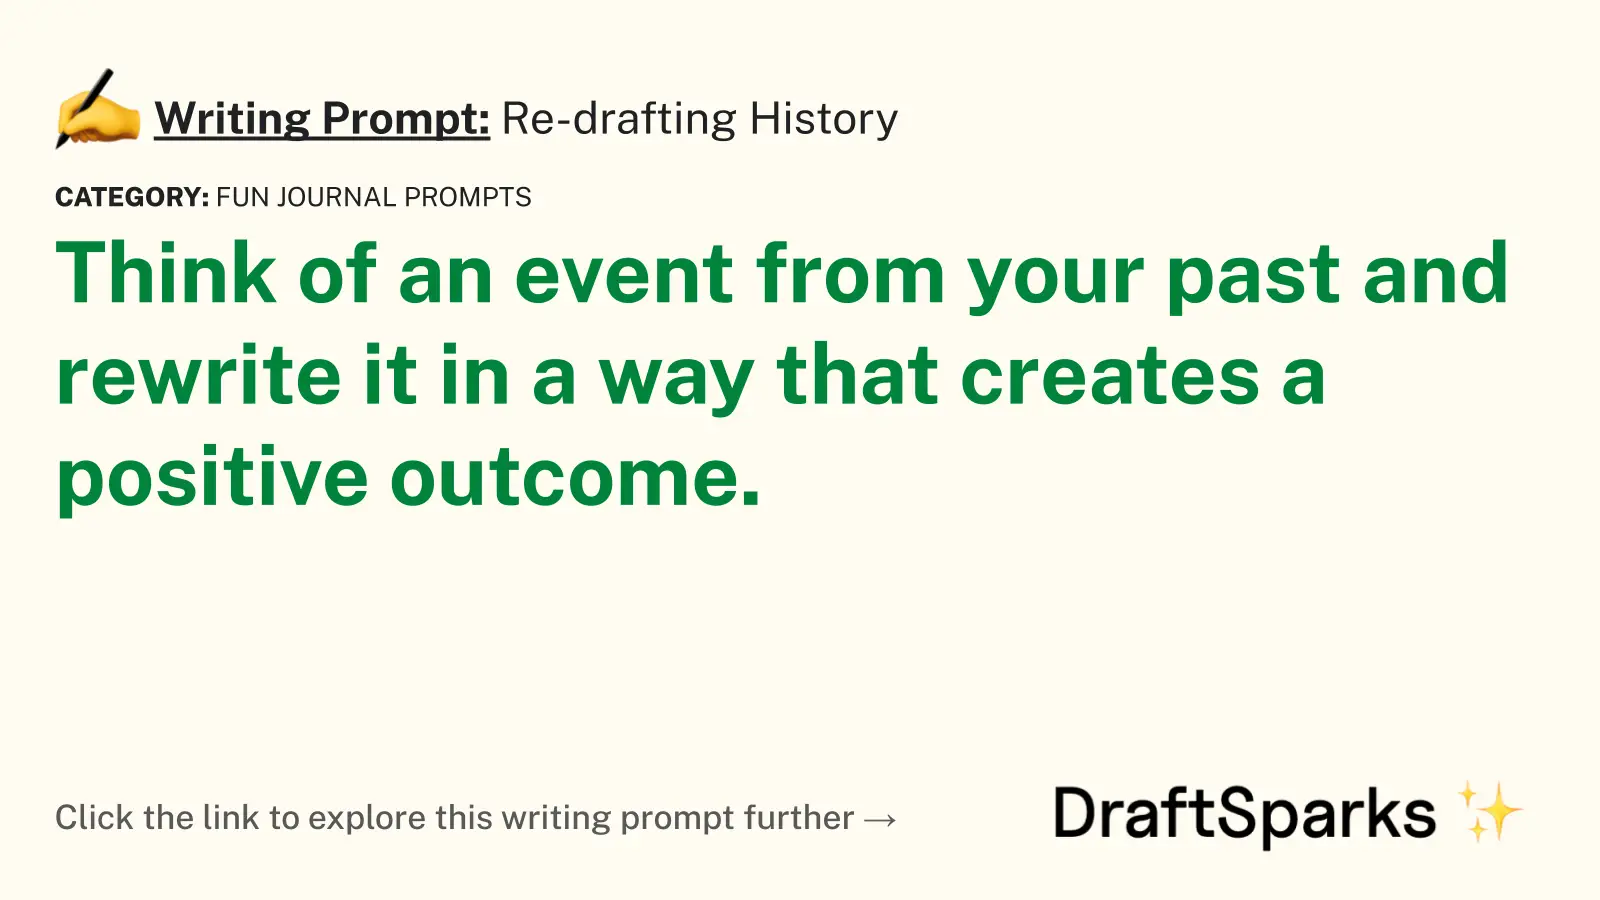 Re-drafting History